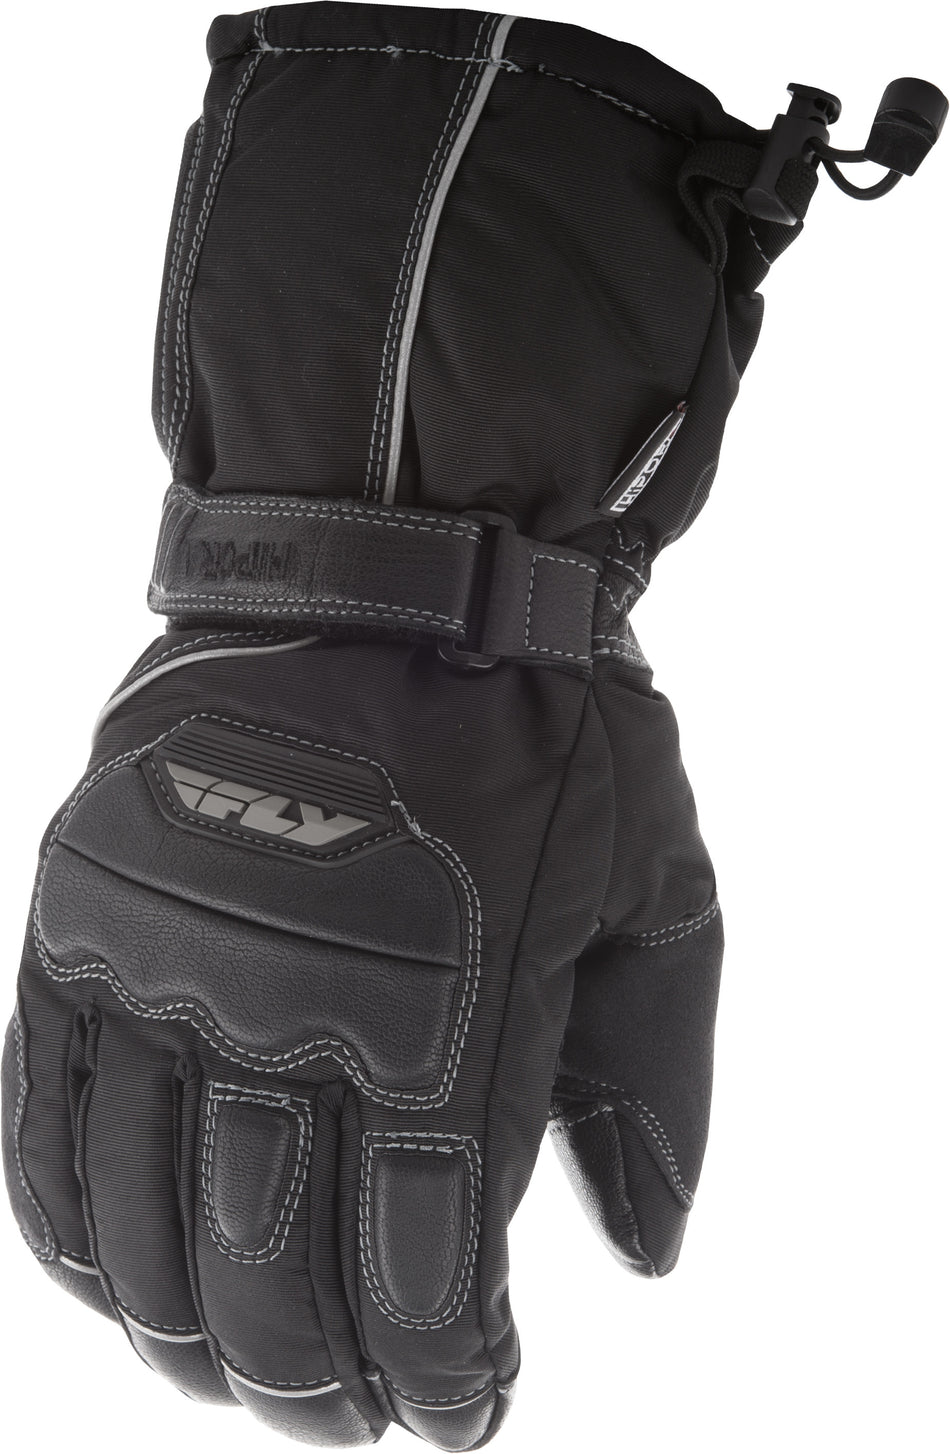 FLY RACING Aurora Gloves Black 4x 363-38914X